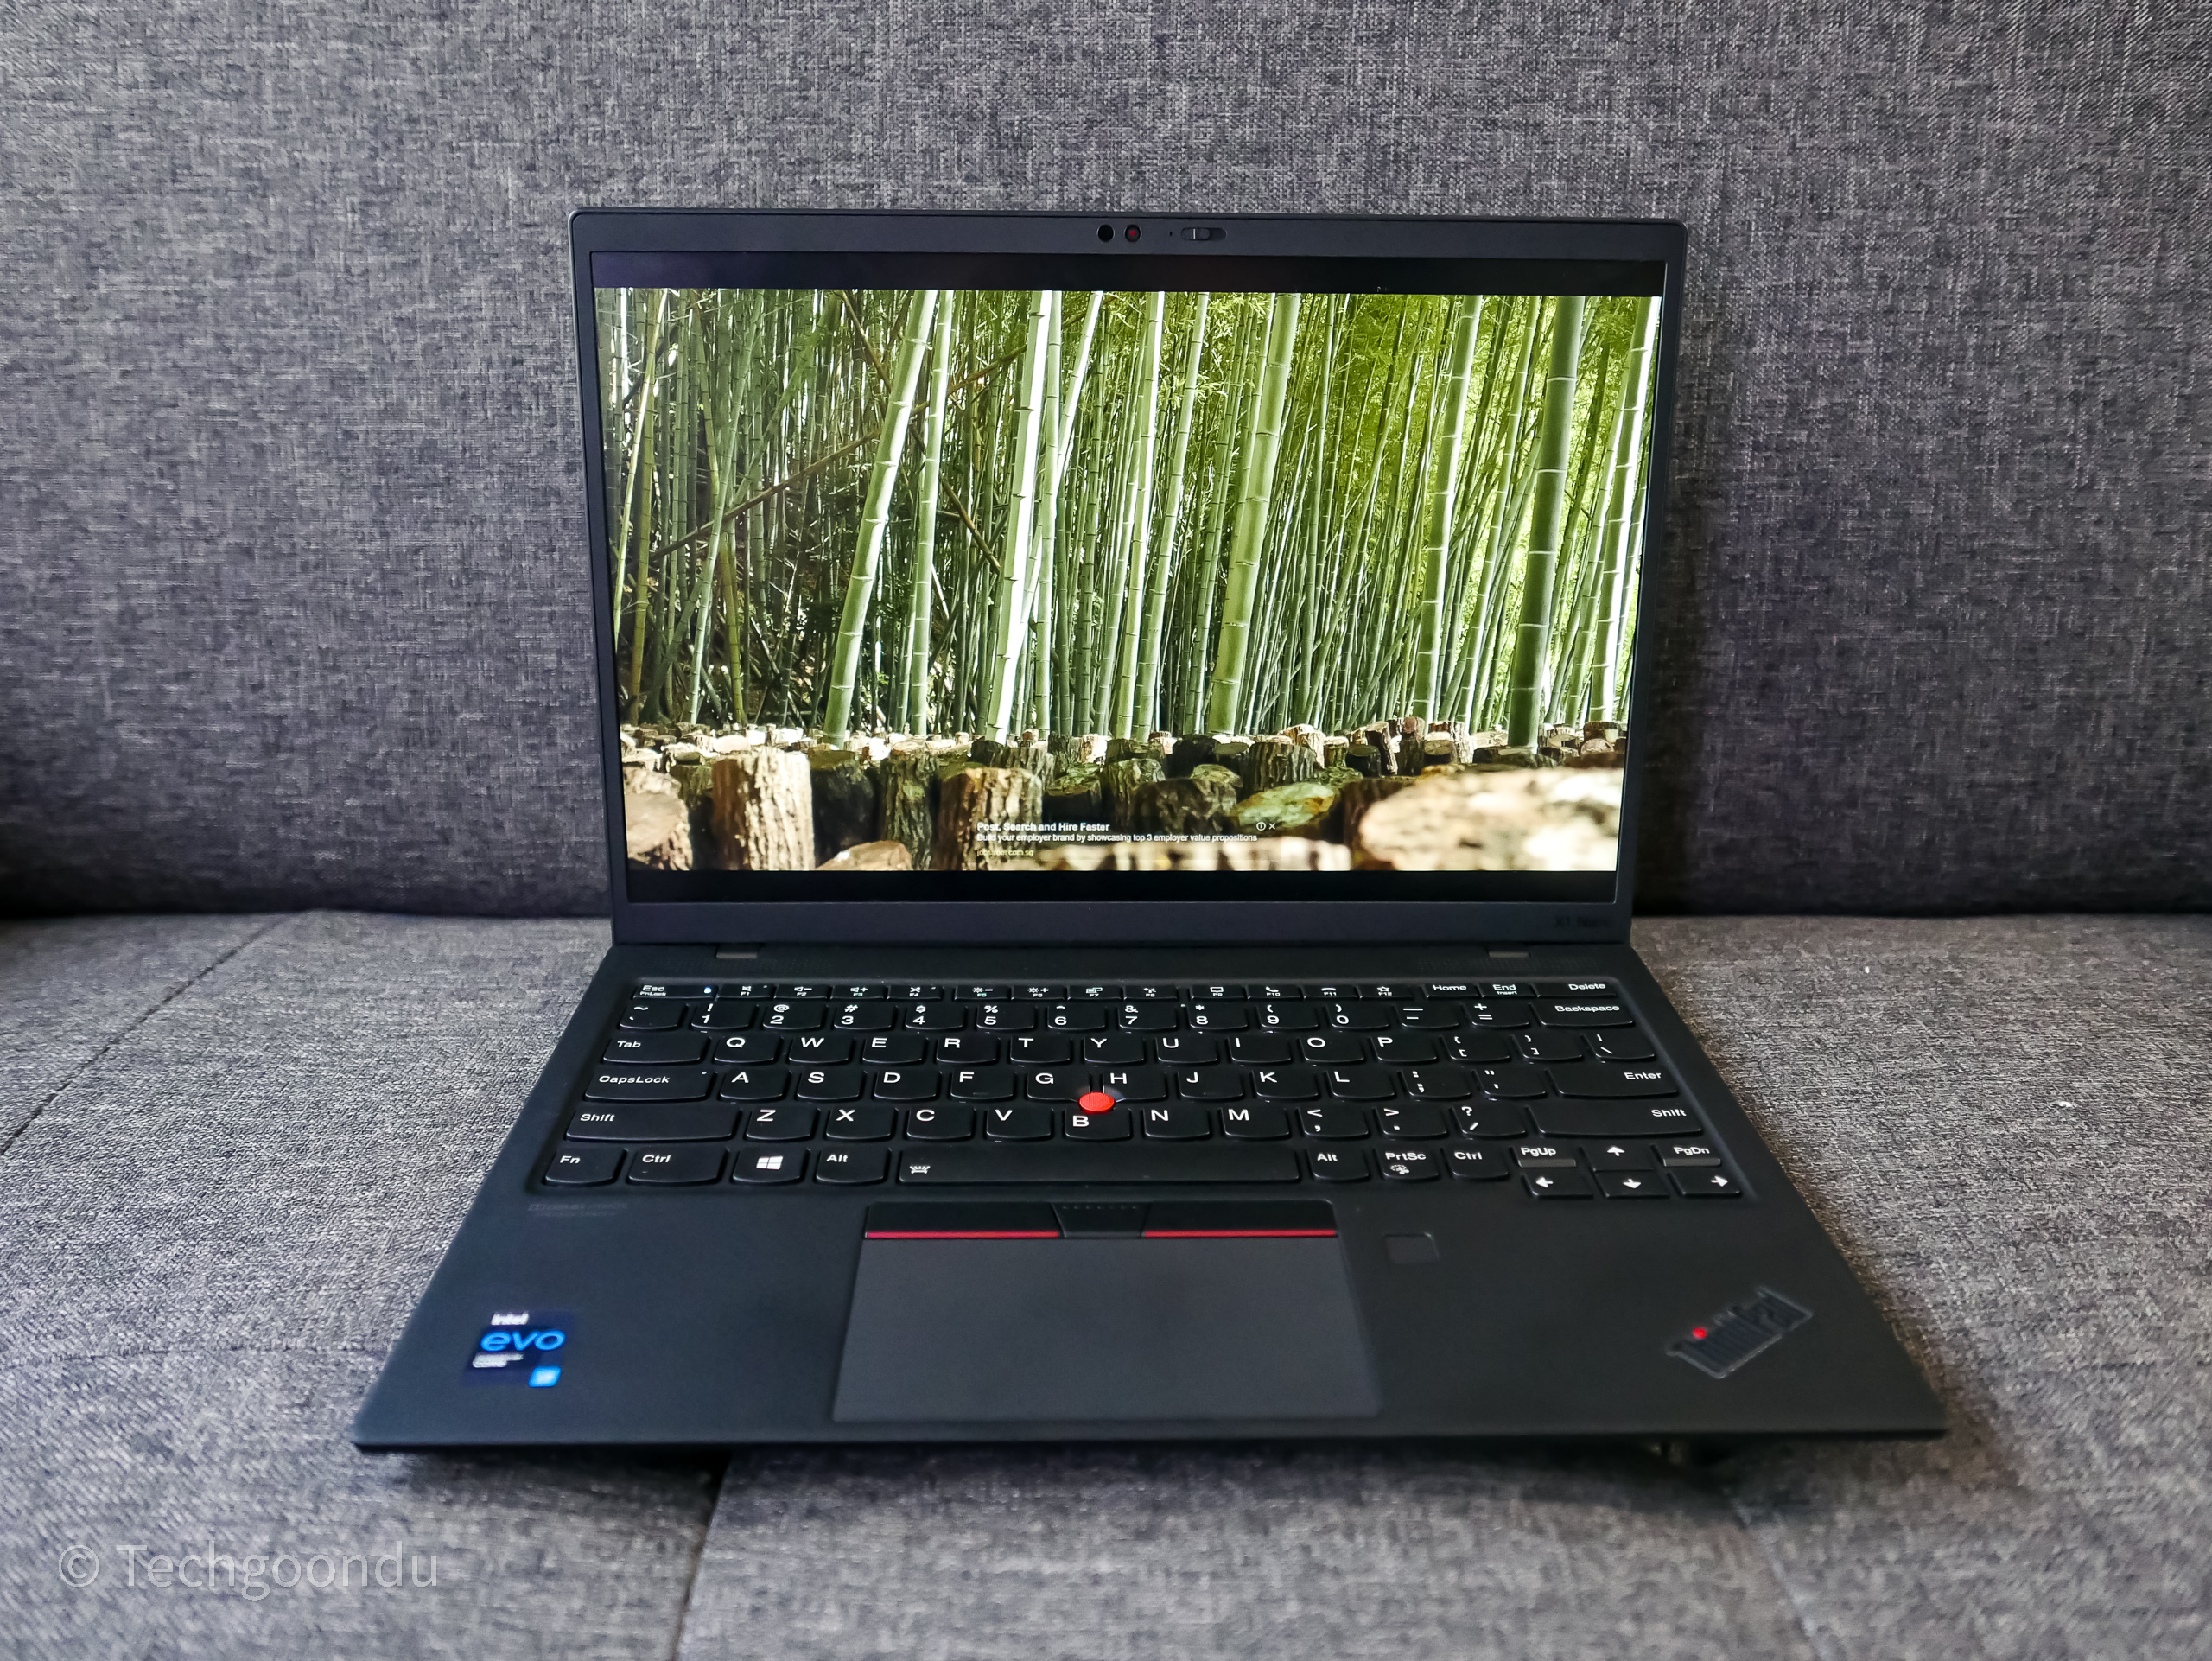 Goondu review: Lenovo ThinkPad X1 Nano stands apart as a premium  ultraportable laptop - Techgoondu